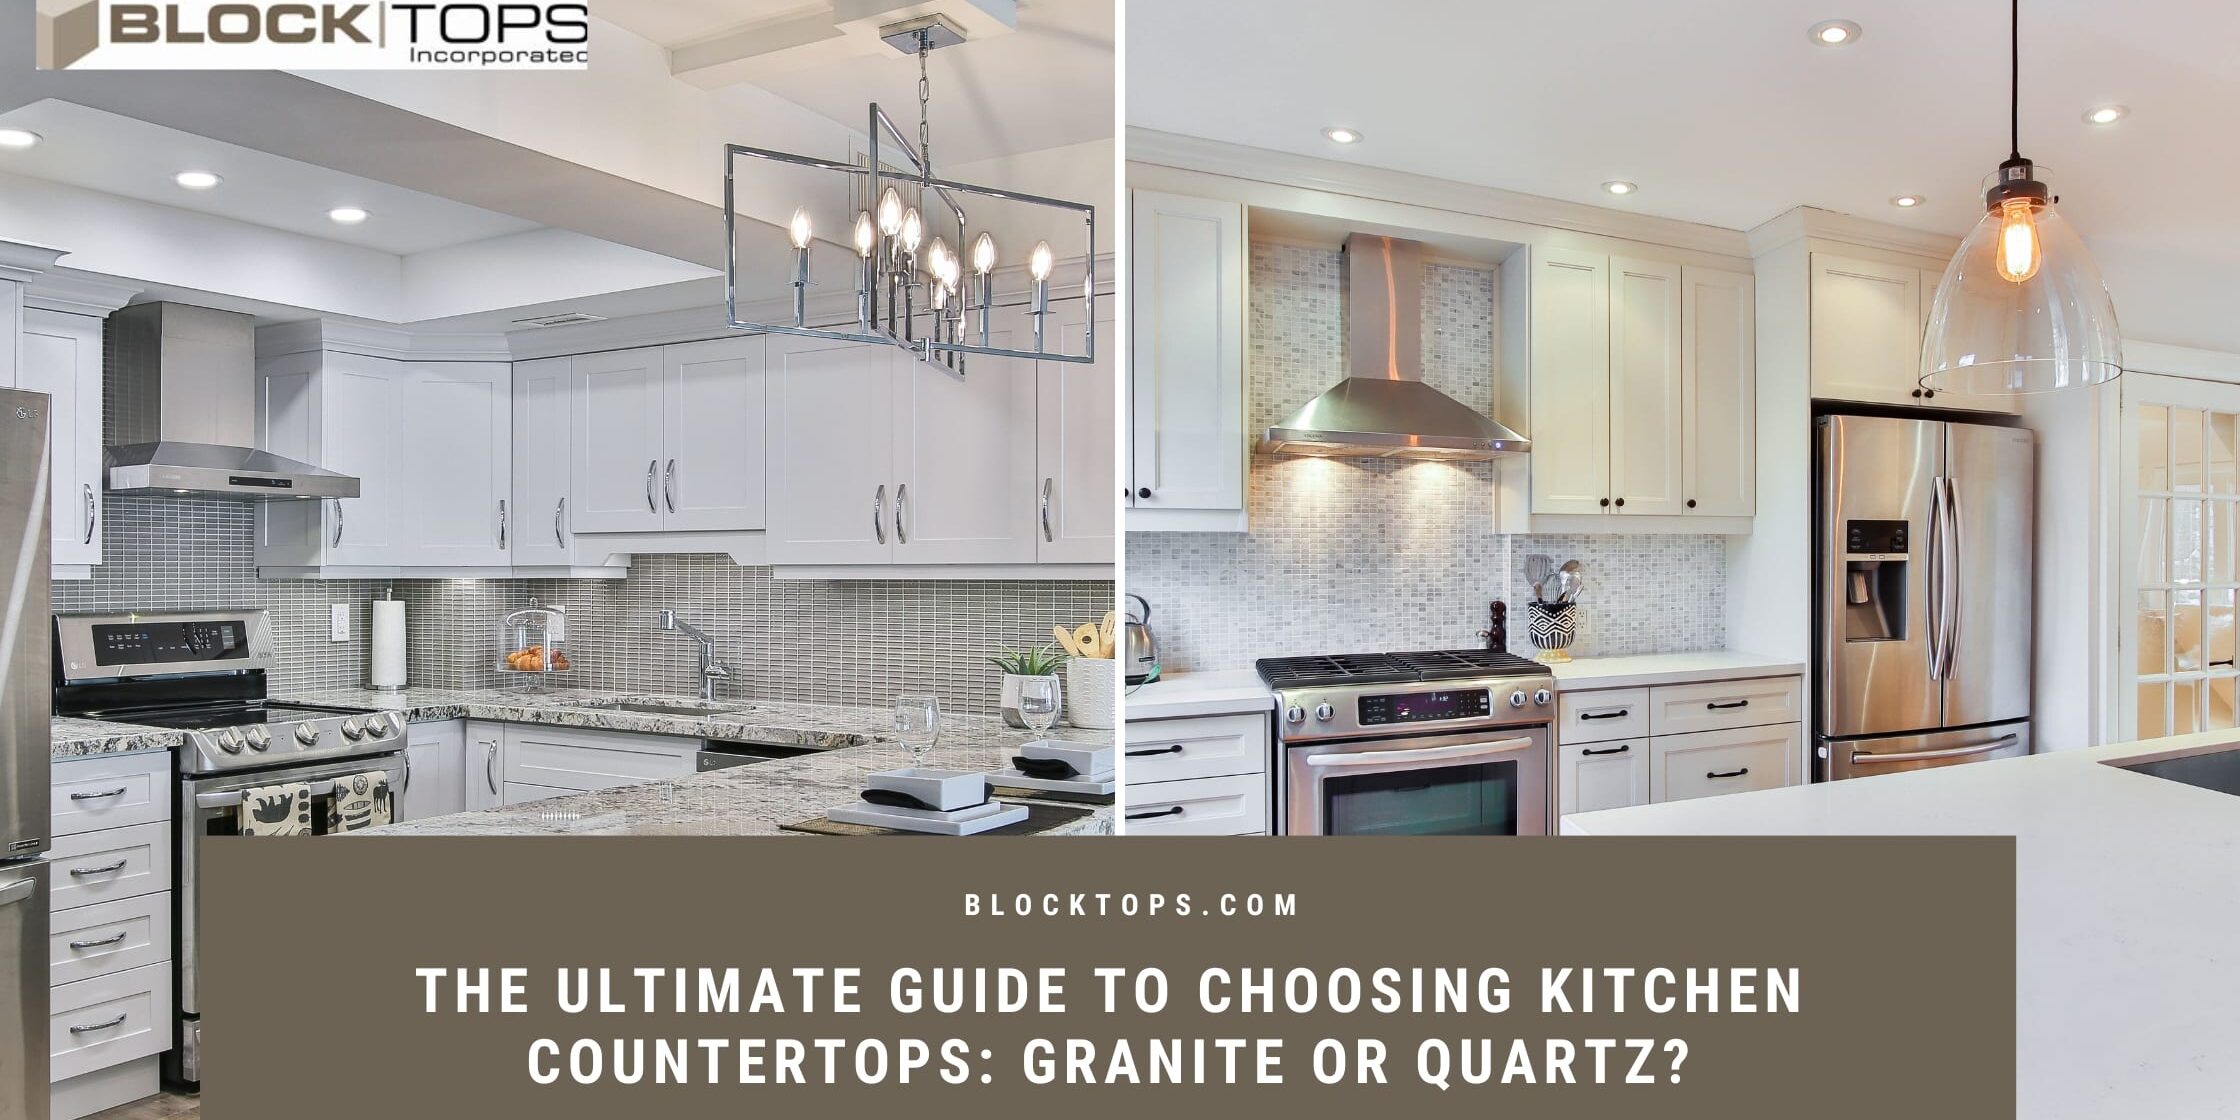 A Guide to Choosing Kitchen Countertops: Granite or Quartz?